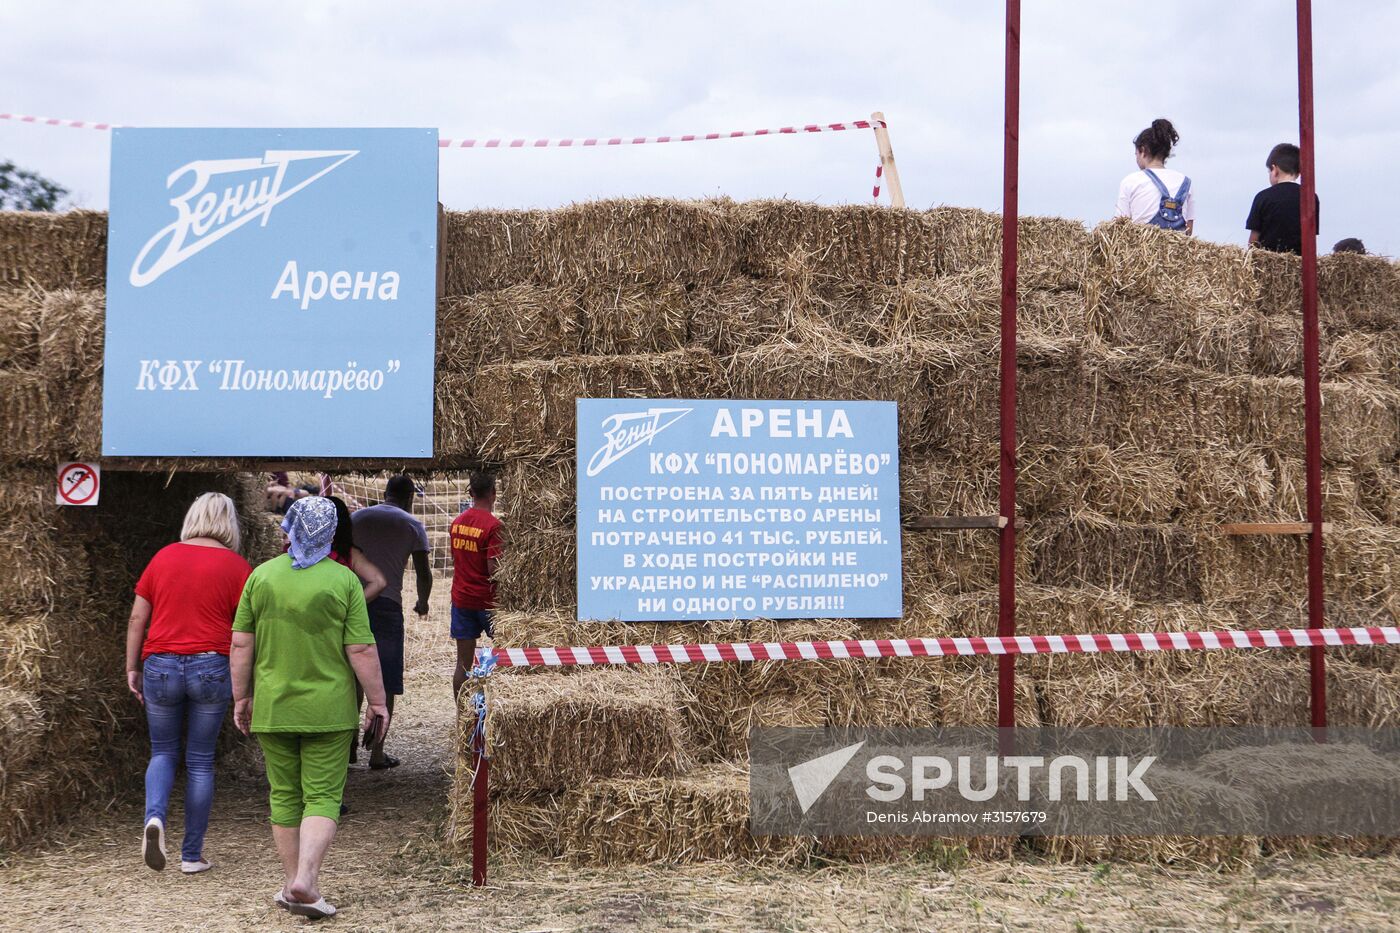 Hay art installations in Stavropol Territory